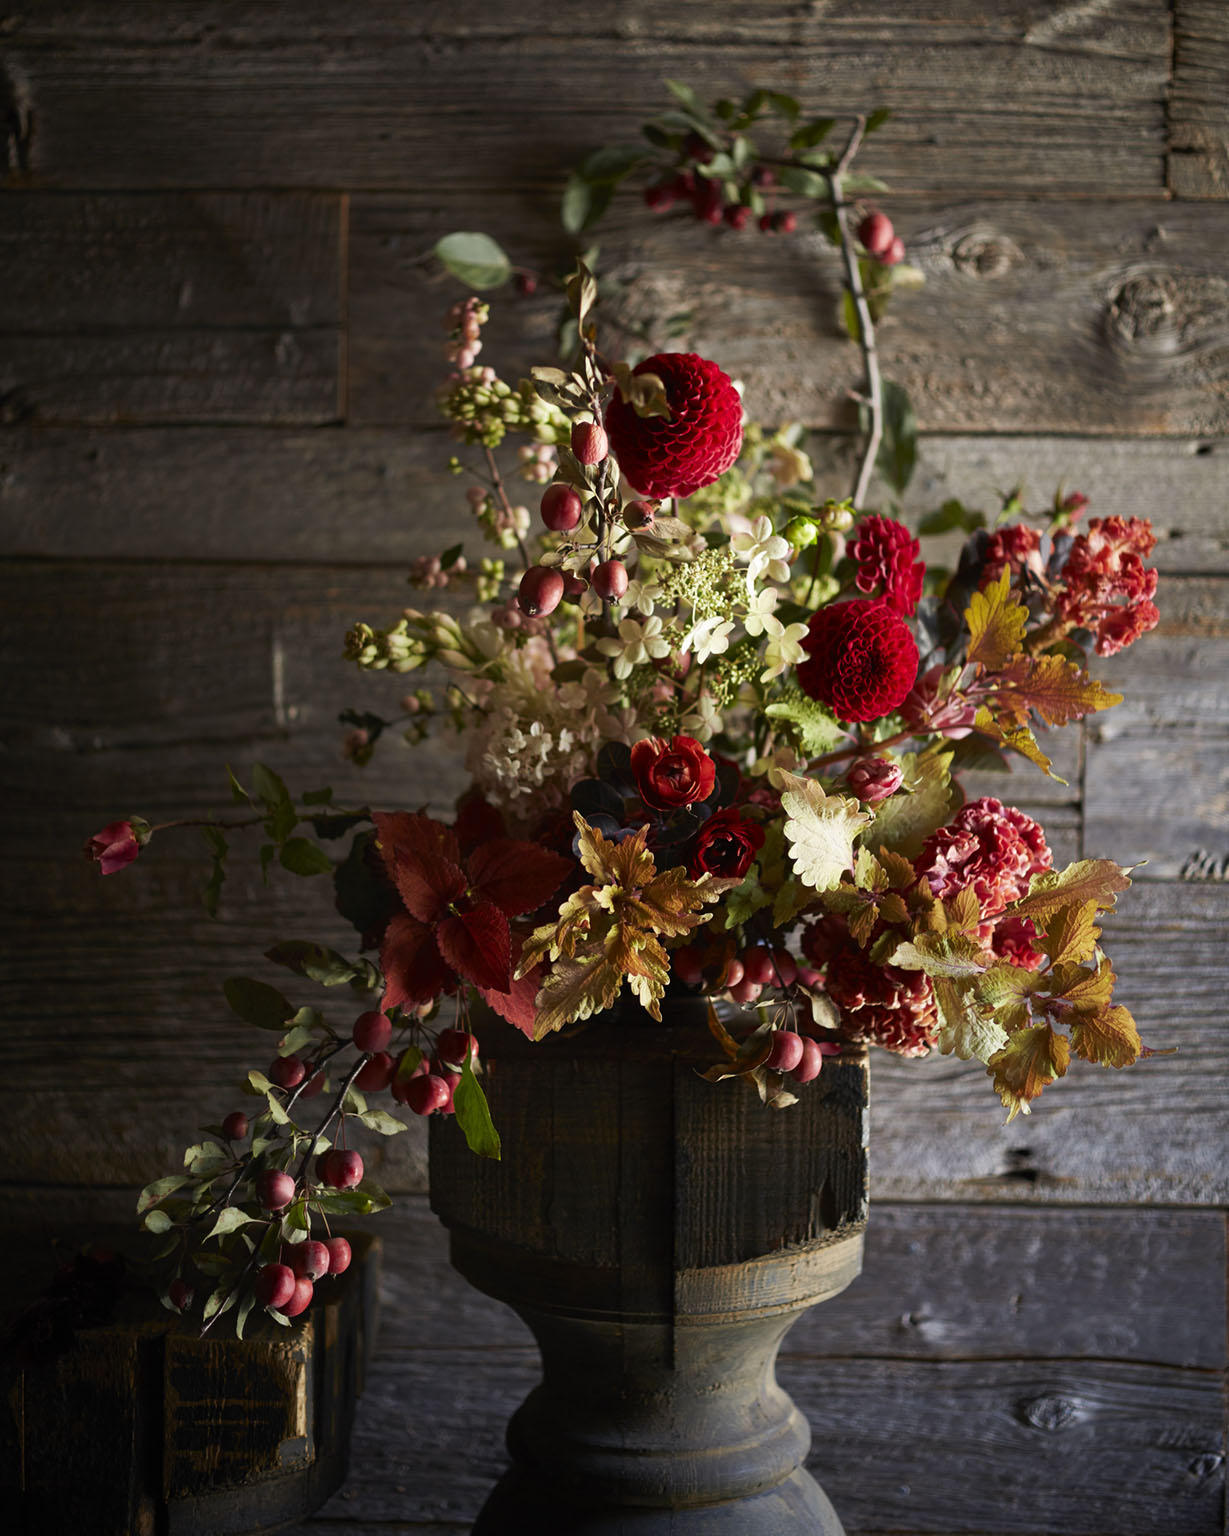 autumn arrangement by Saipua featuring red dahlias